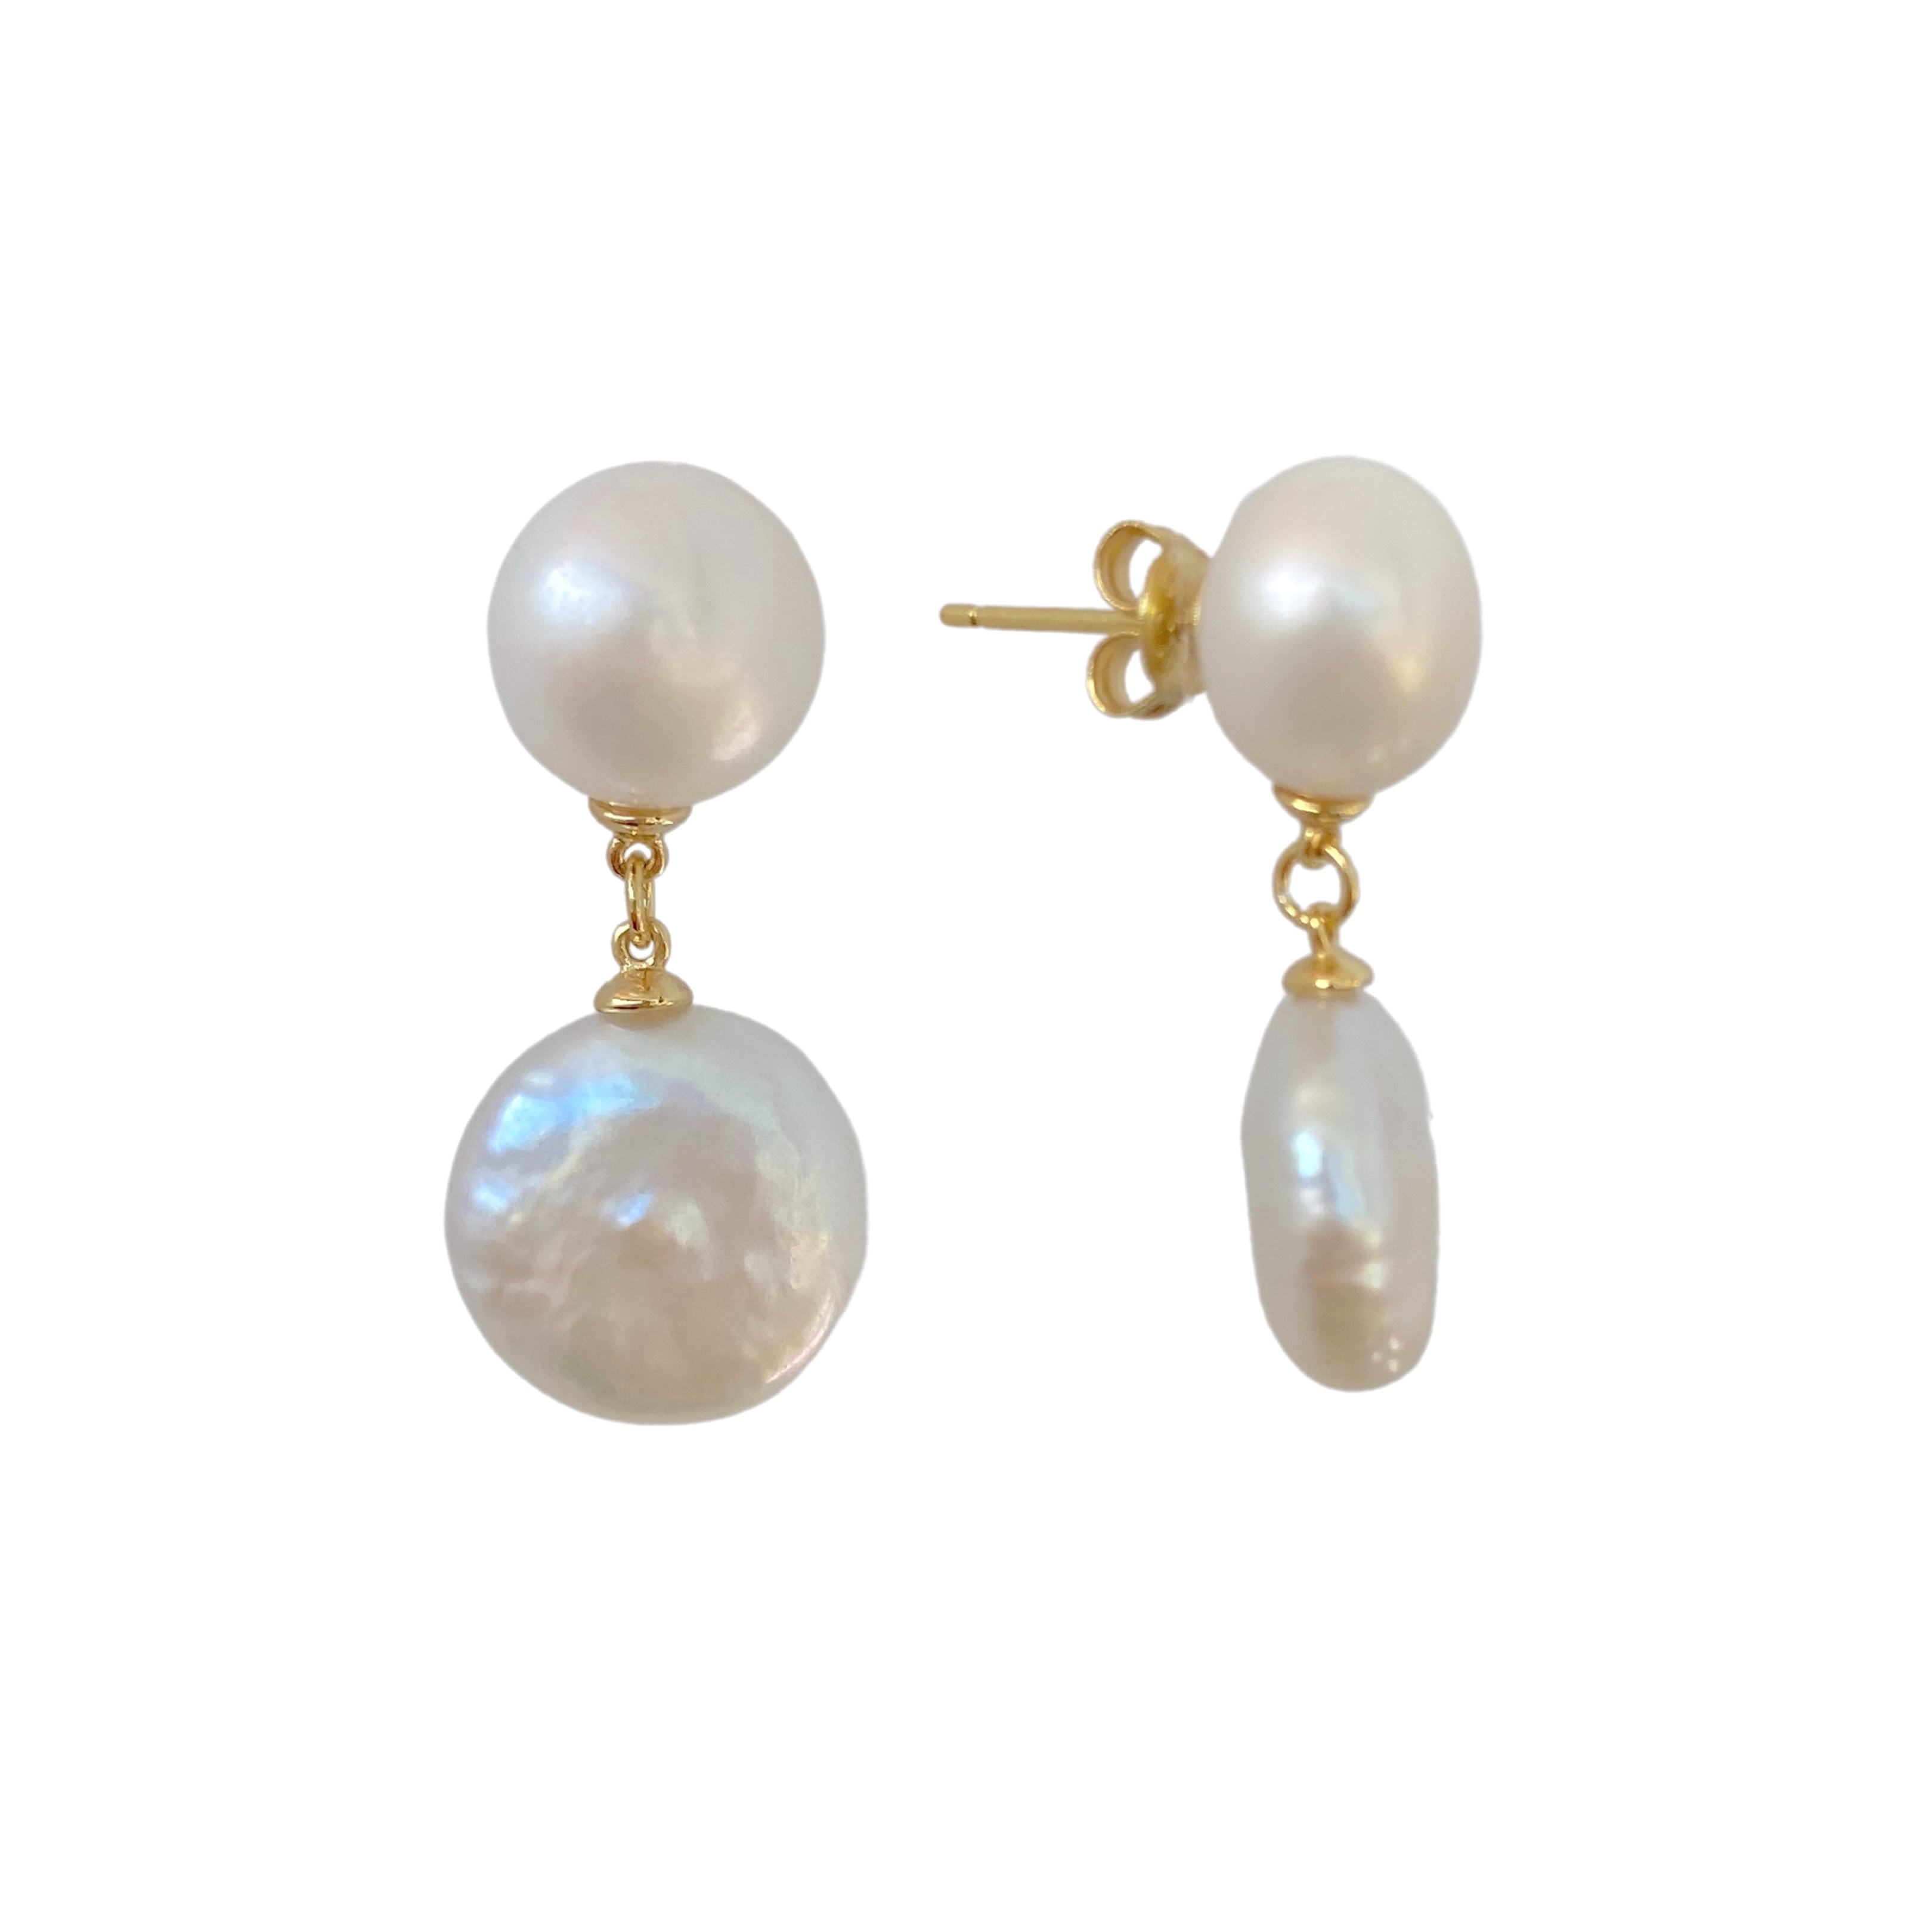 Double Drop pearls